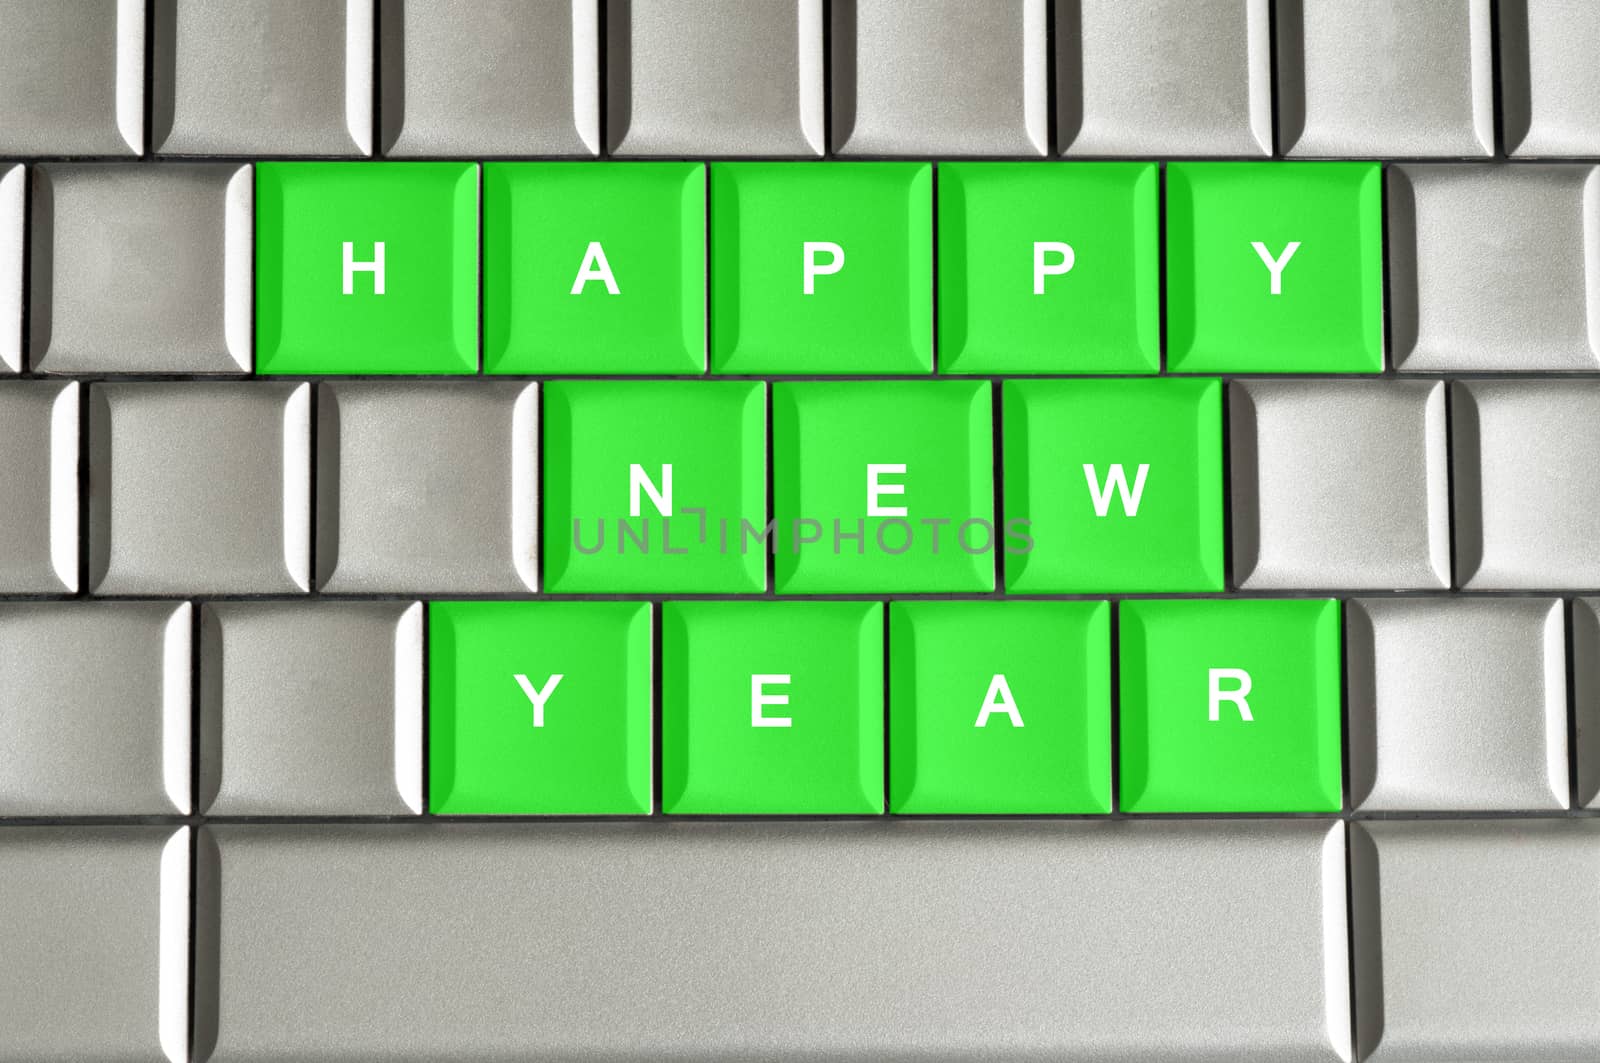 Happy New Year spelled on a silver metallic keyboard